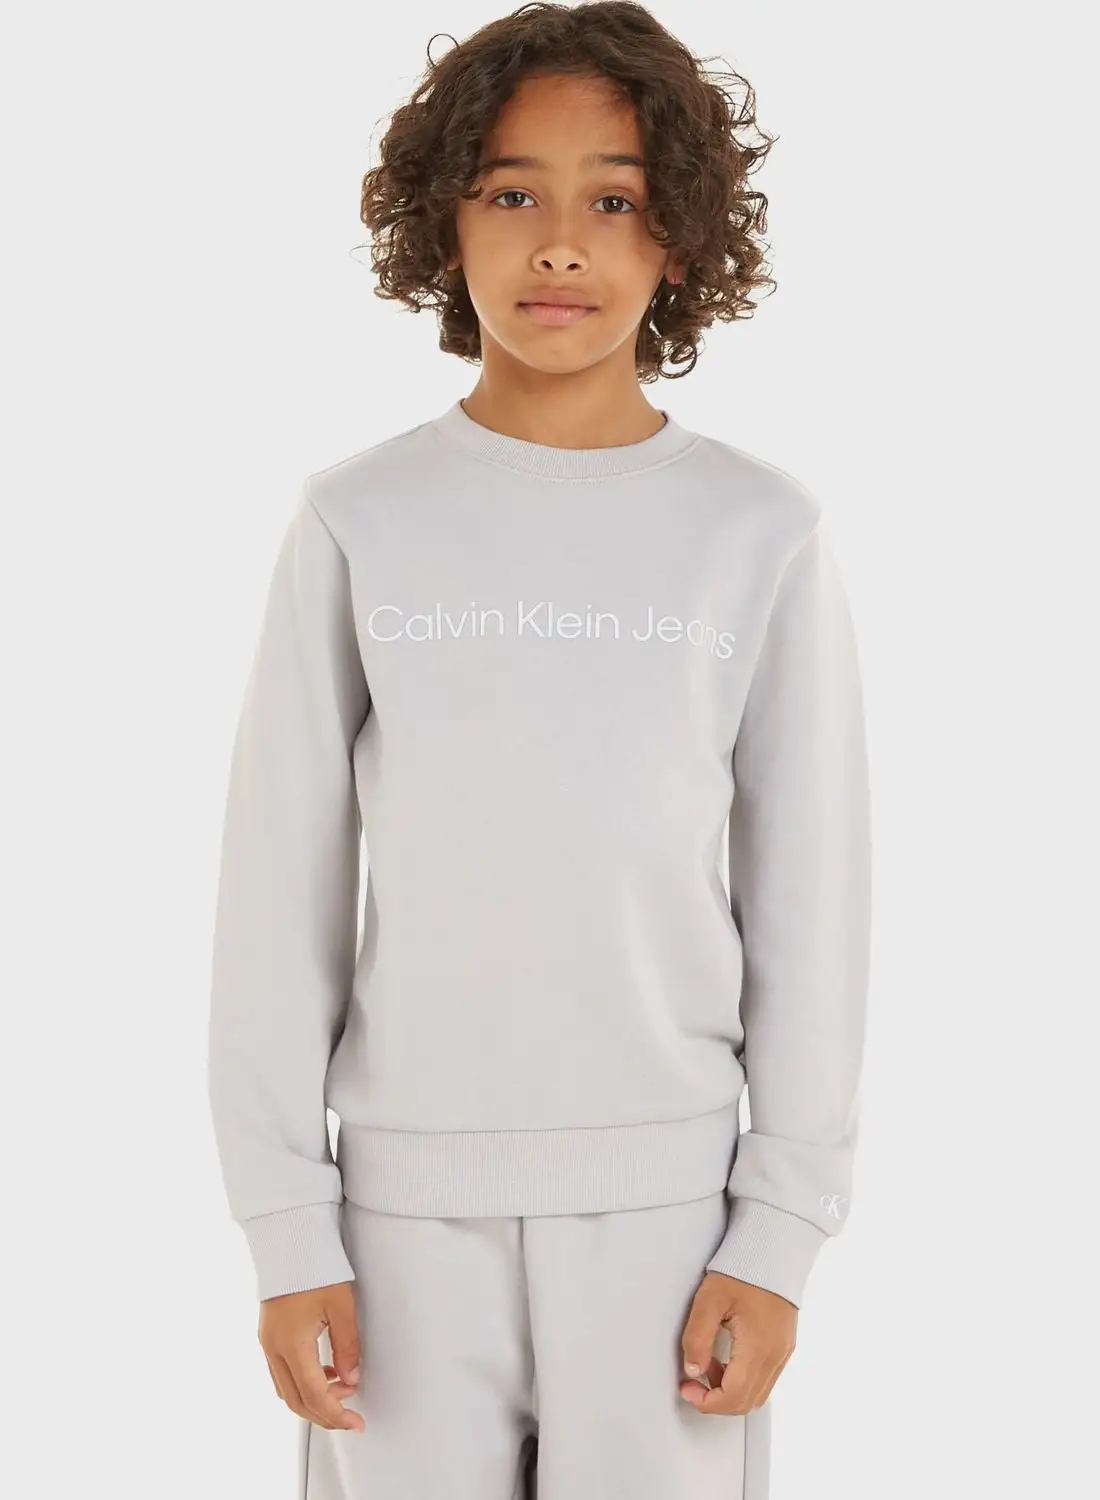 Calvin Klein Jeans Youth Logo Sweatshirt